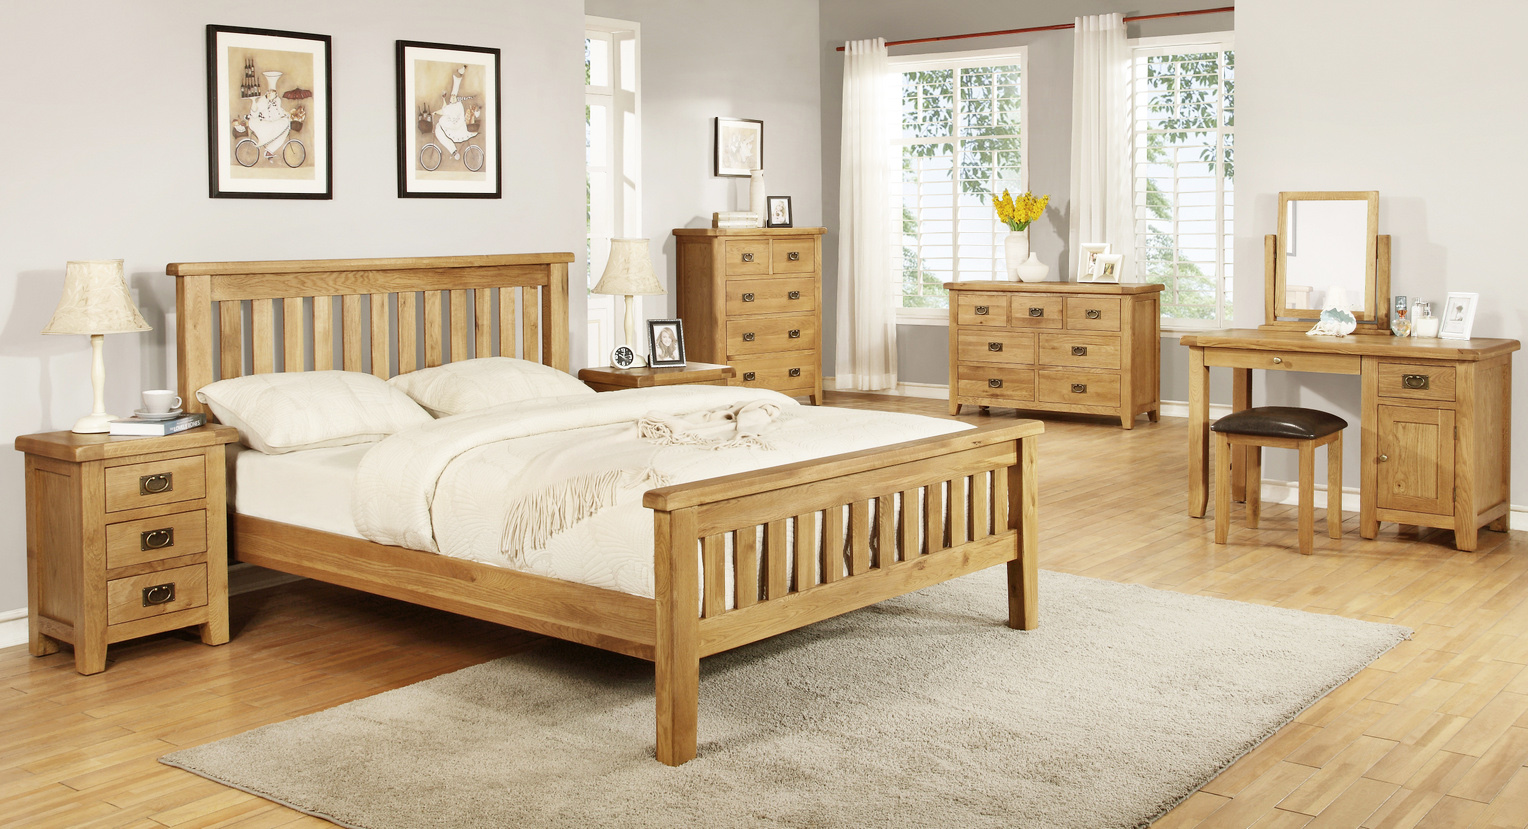 new oak bedroom furniture